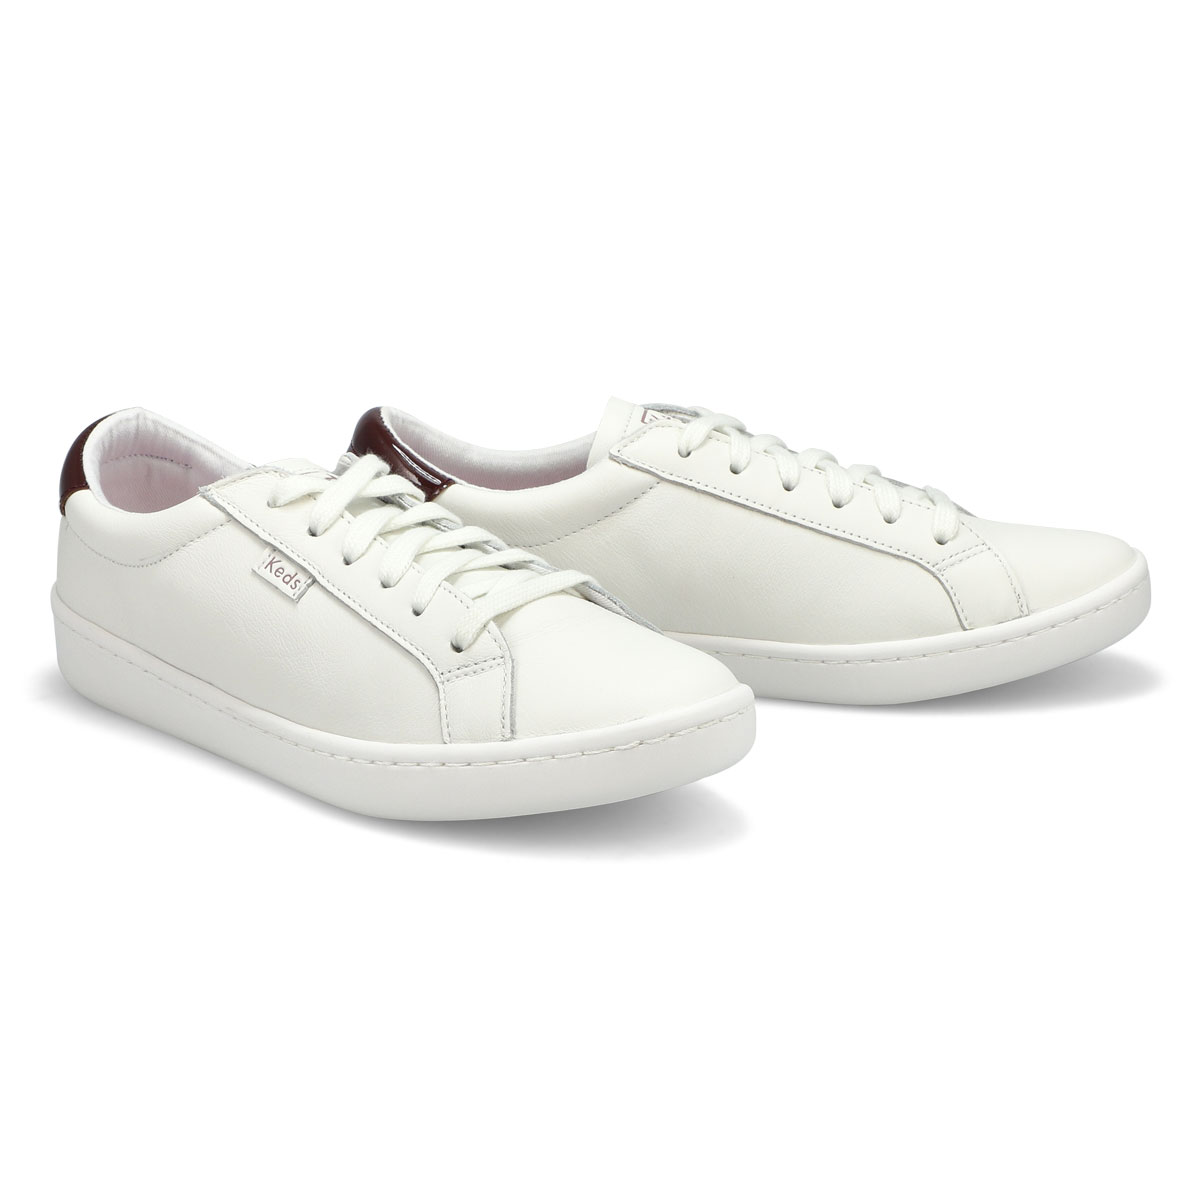 Women's Ace Leather Sneaker - White/Burgundy